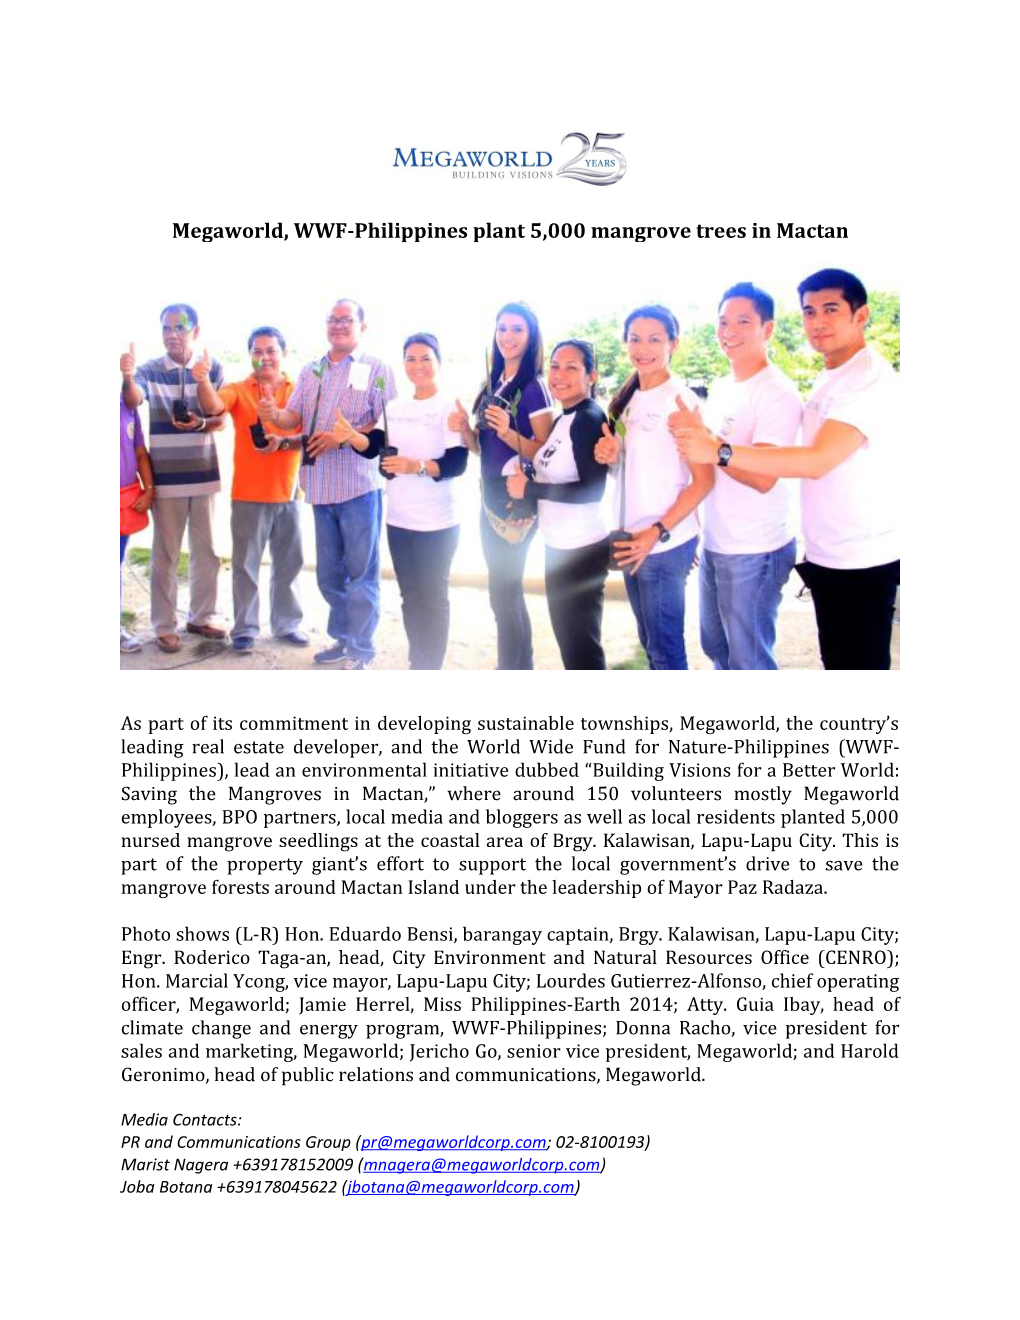 Megaworld, WWF-Philippines Plant 5,000 Mangrove Trees in Mactan